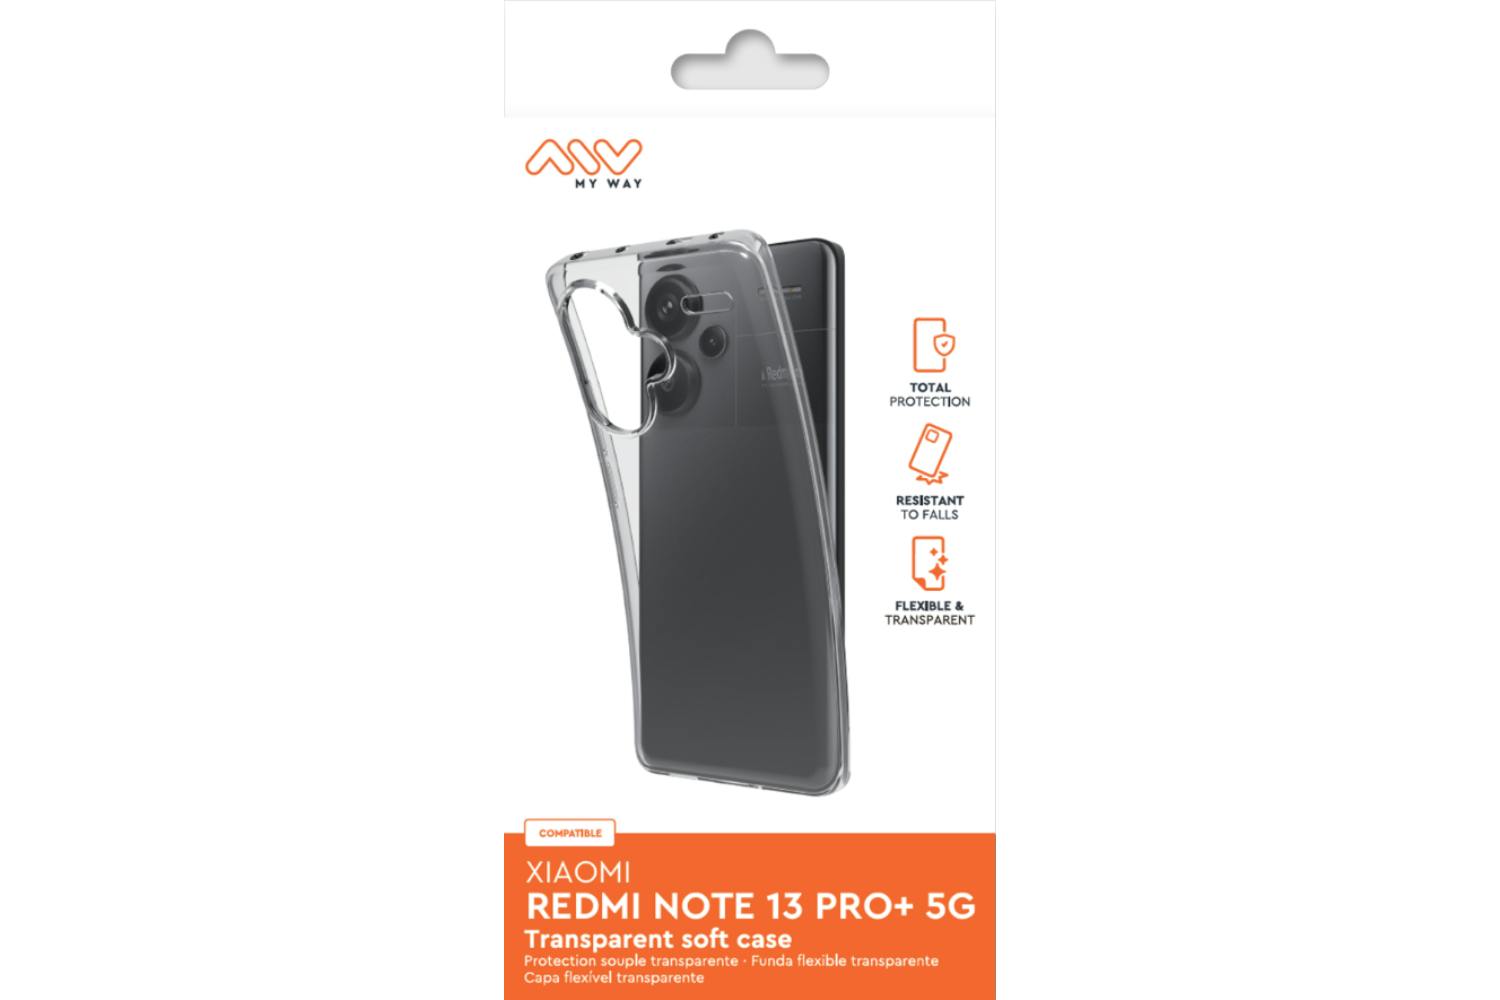 My Way Xiaomi Redmi Note 13 Pro+ 5G Transparent Soft Case